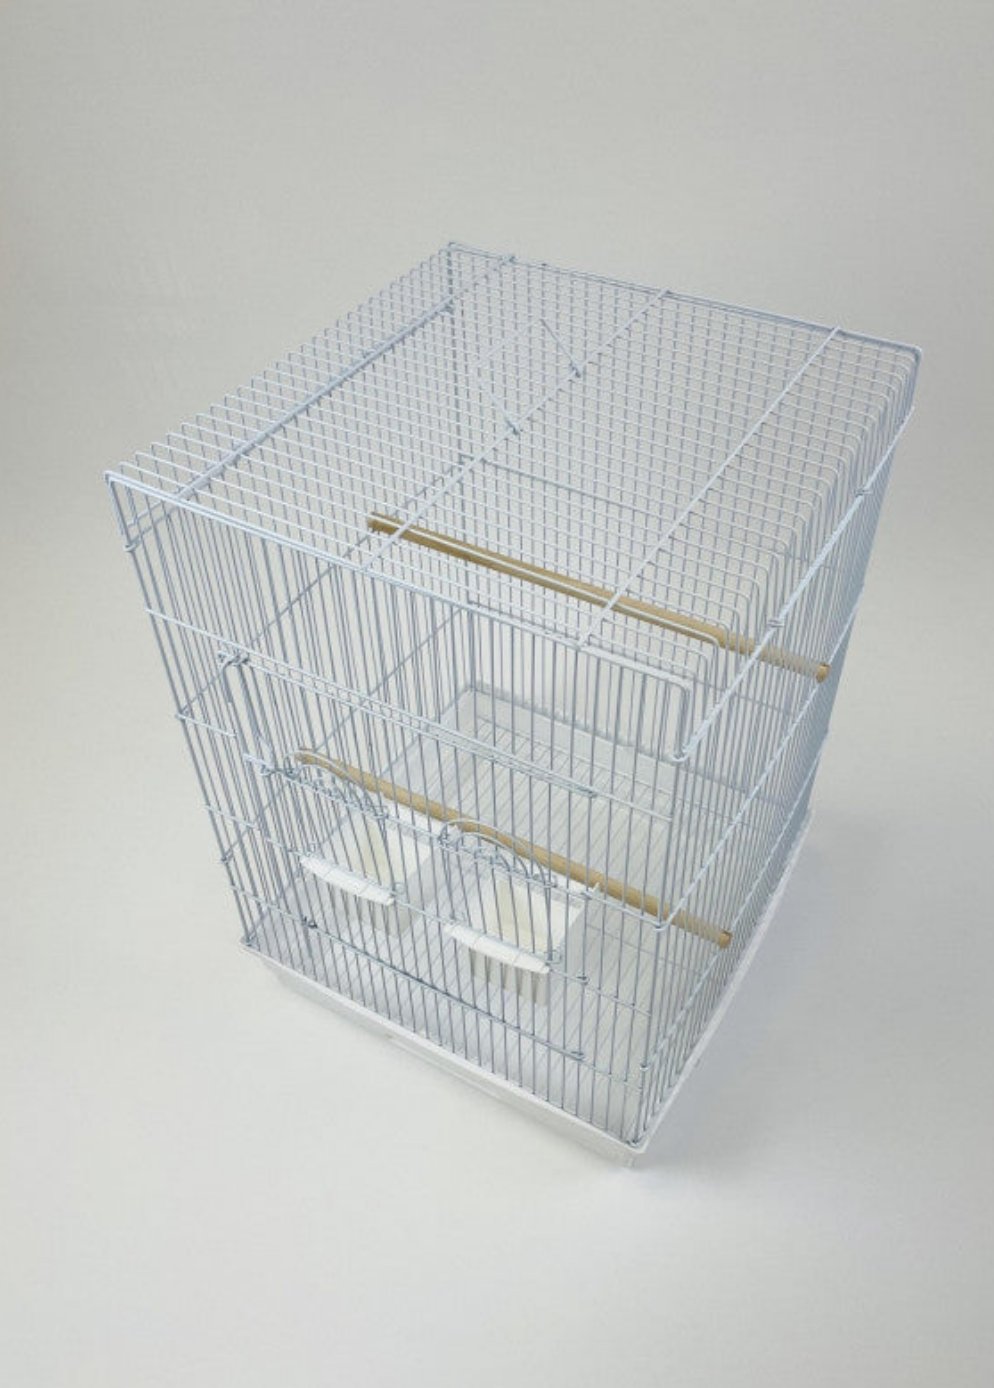 17×17 Portable Cage